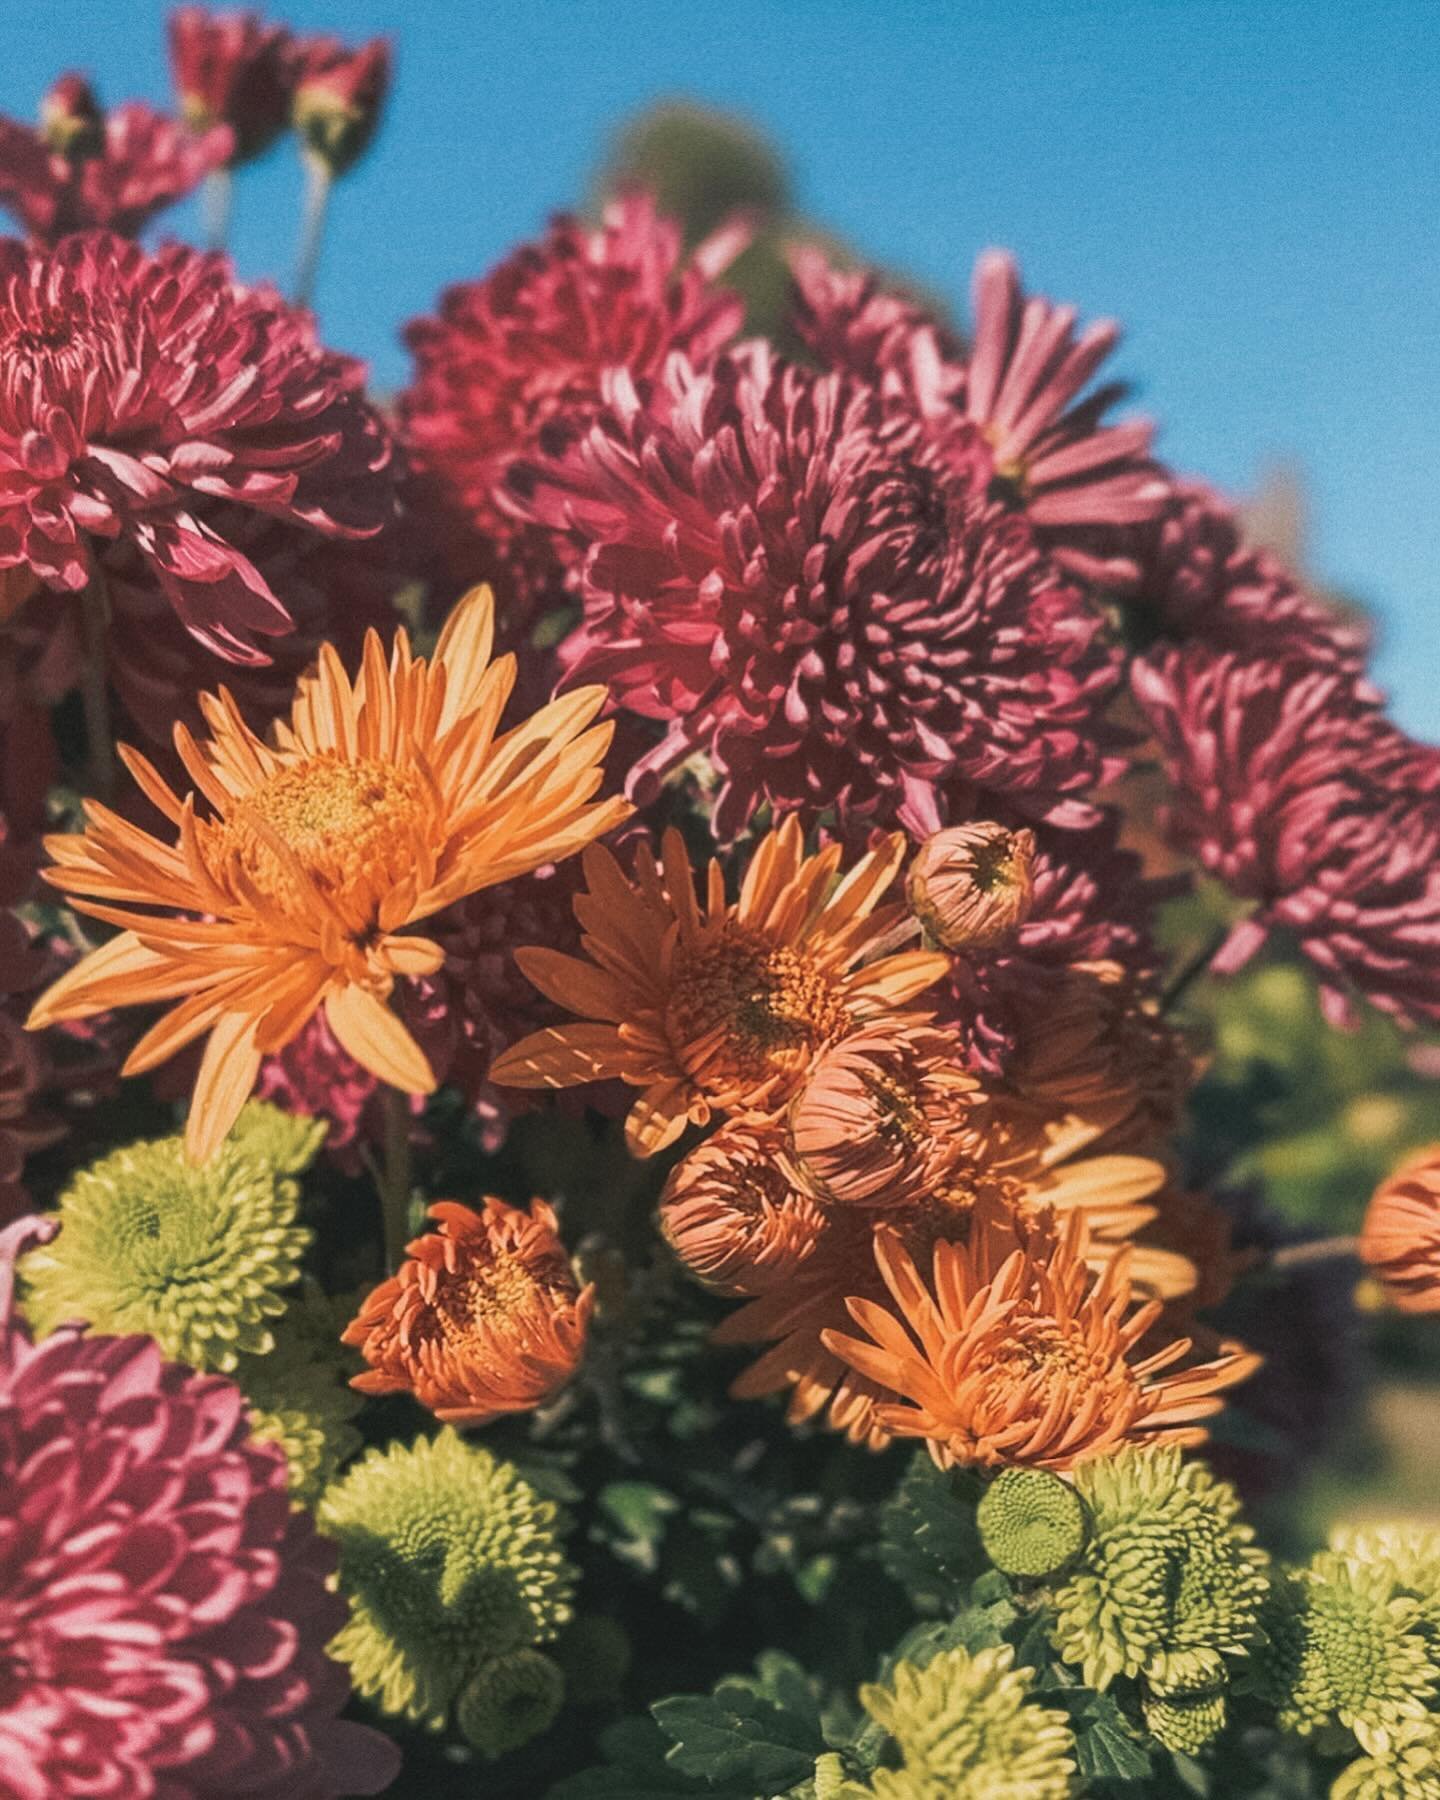 Chrysanthe-yums.  #Yarravalleyflowers #handpickedflowers #sprayfreeflowers #sustainableflowers #grownnotflown  #shortacrefarm  #healesville #flowers #yarravalley #florist